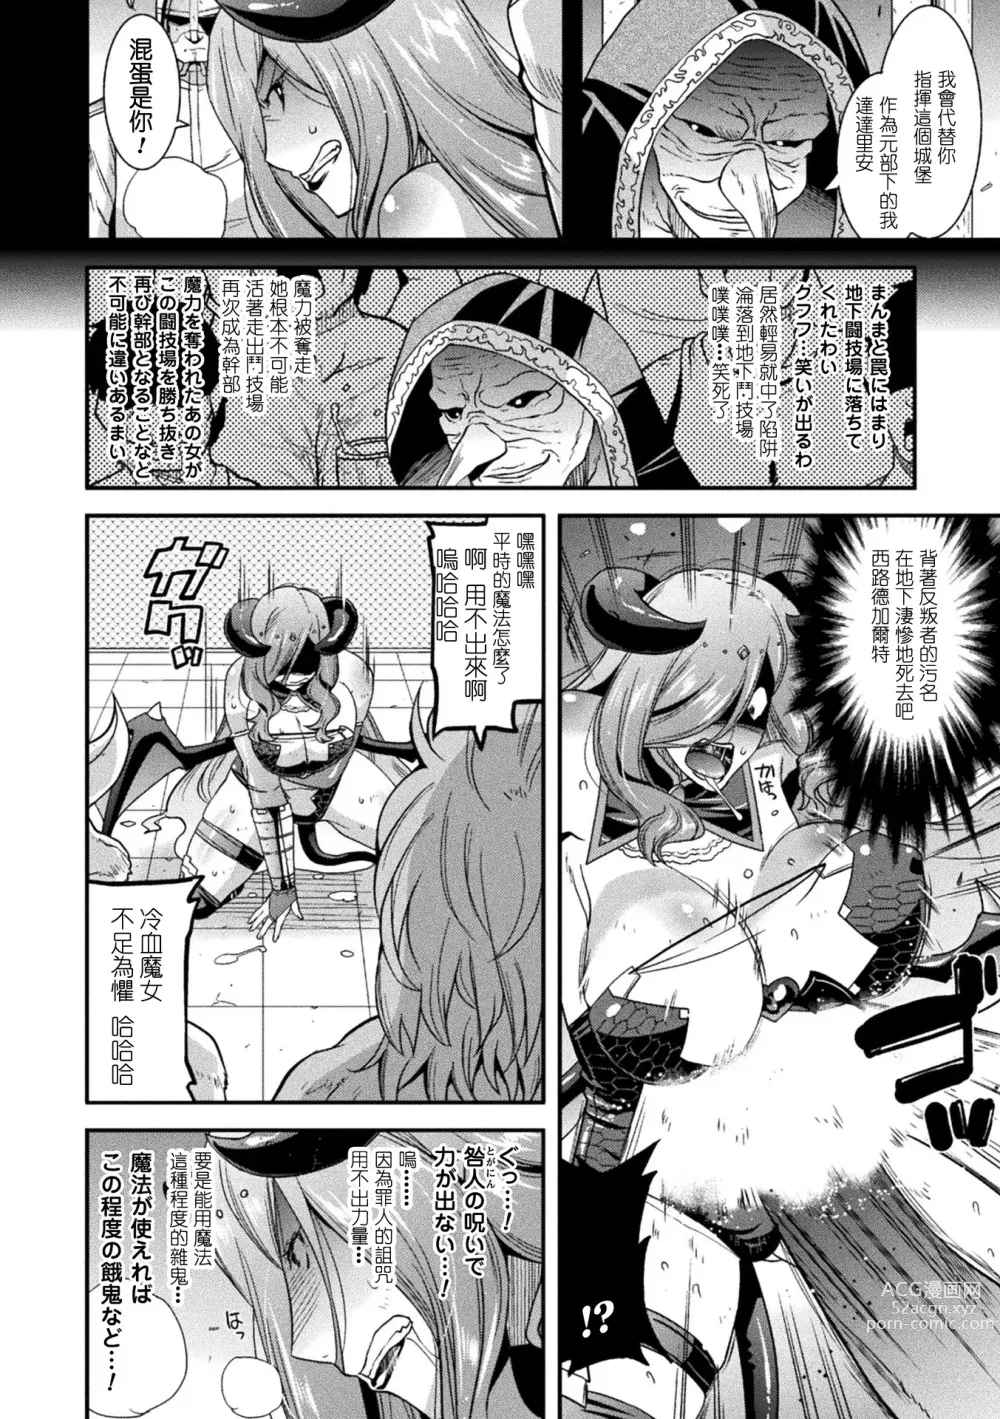 Page 8 of manga Harami Otsu Ikusa Otome